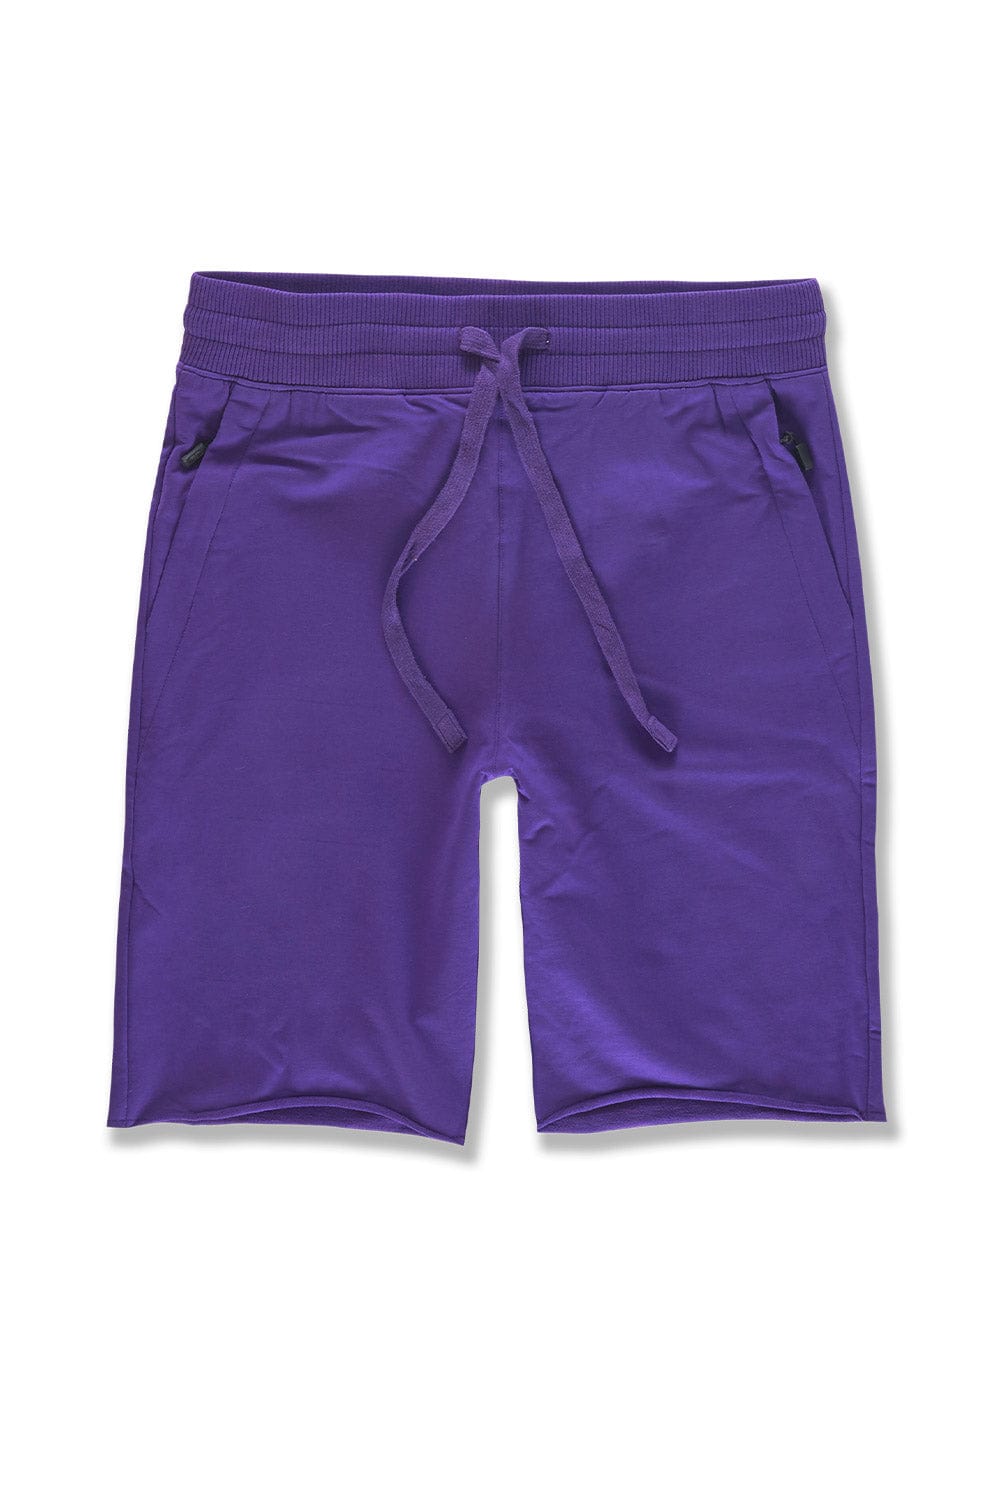 JC Big Men Big Men's OG Palma French Terry Shorts (Name Your Price) Purple / 4XL